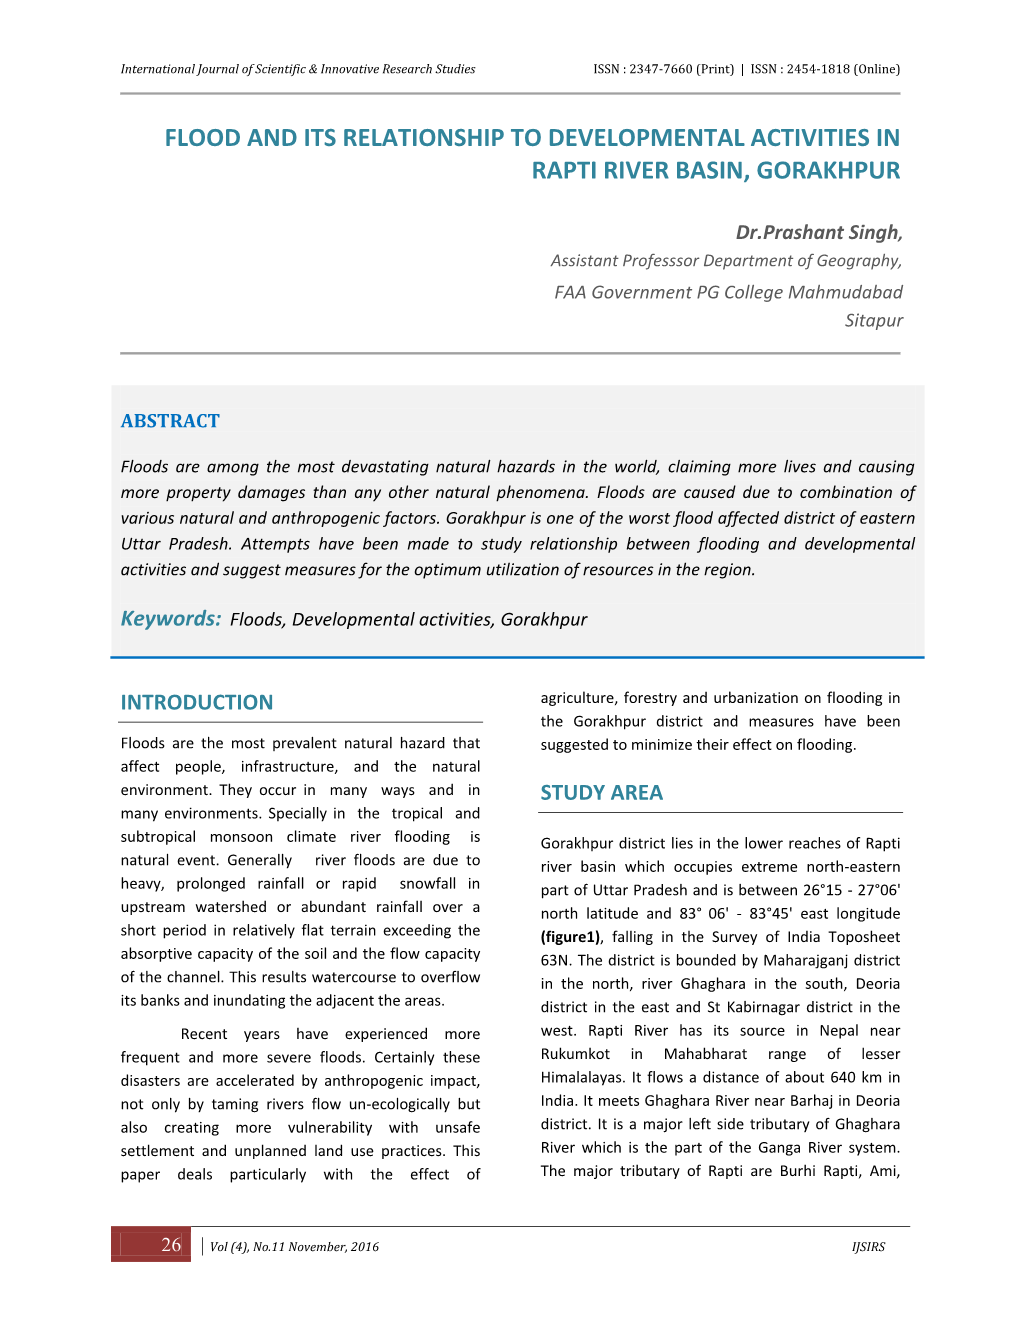 Flood and Its Relationship to Developmental Activities in Rapti River Basin, Gorakhpur